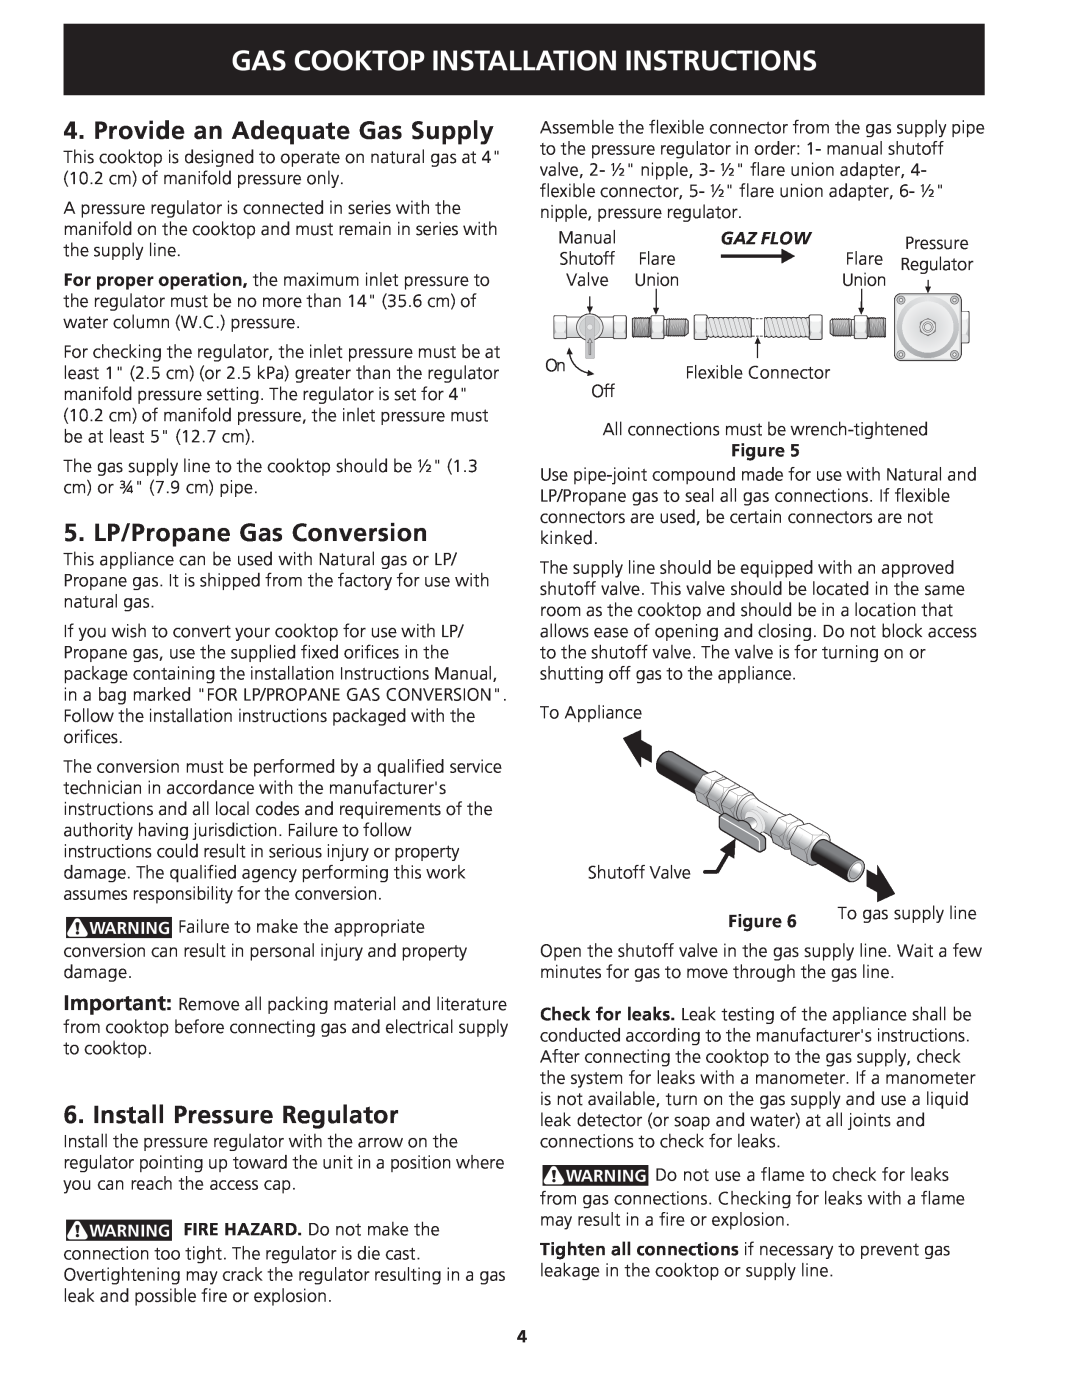 Frigidaire 318201451 Provide an Adequate Gas Supply, 5. LP/Propane Gas Conversion, Install Pressure Regulator, Gaz Flow 